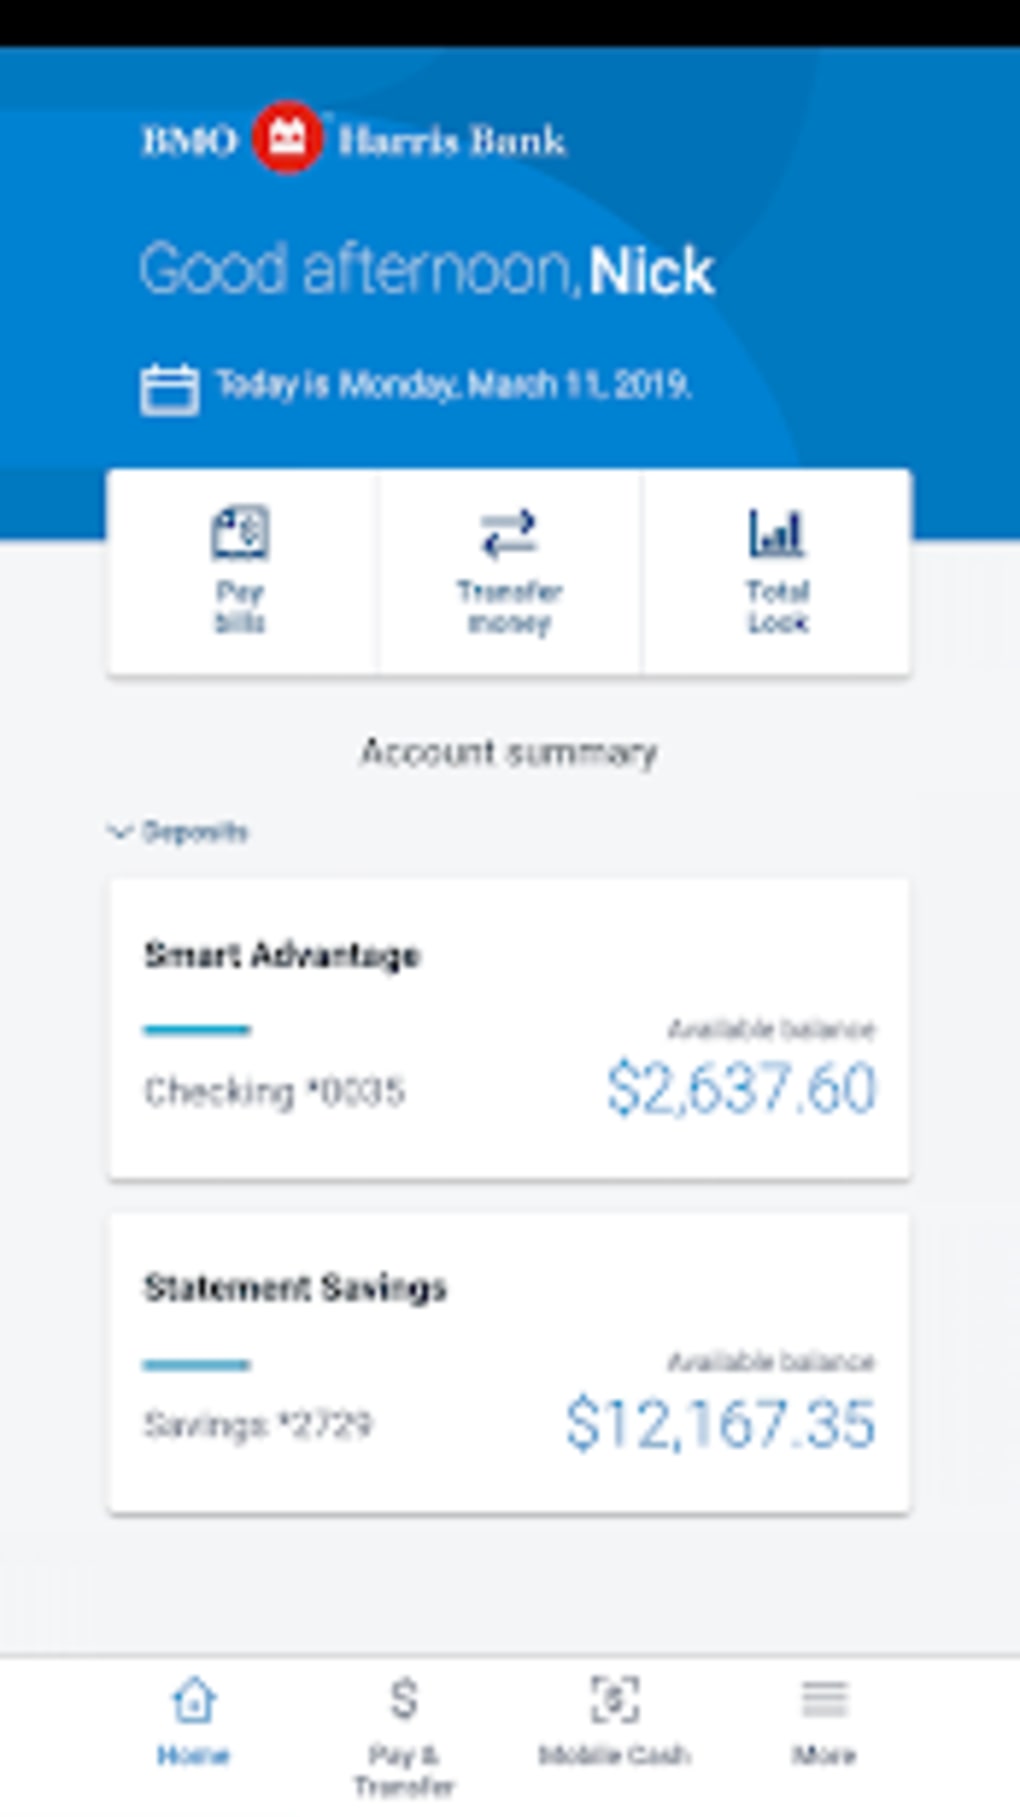 bmo online banking app download